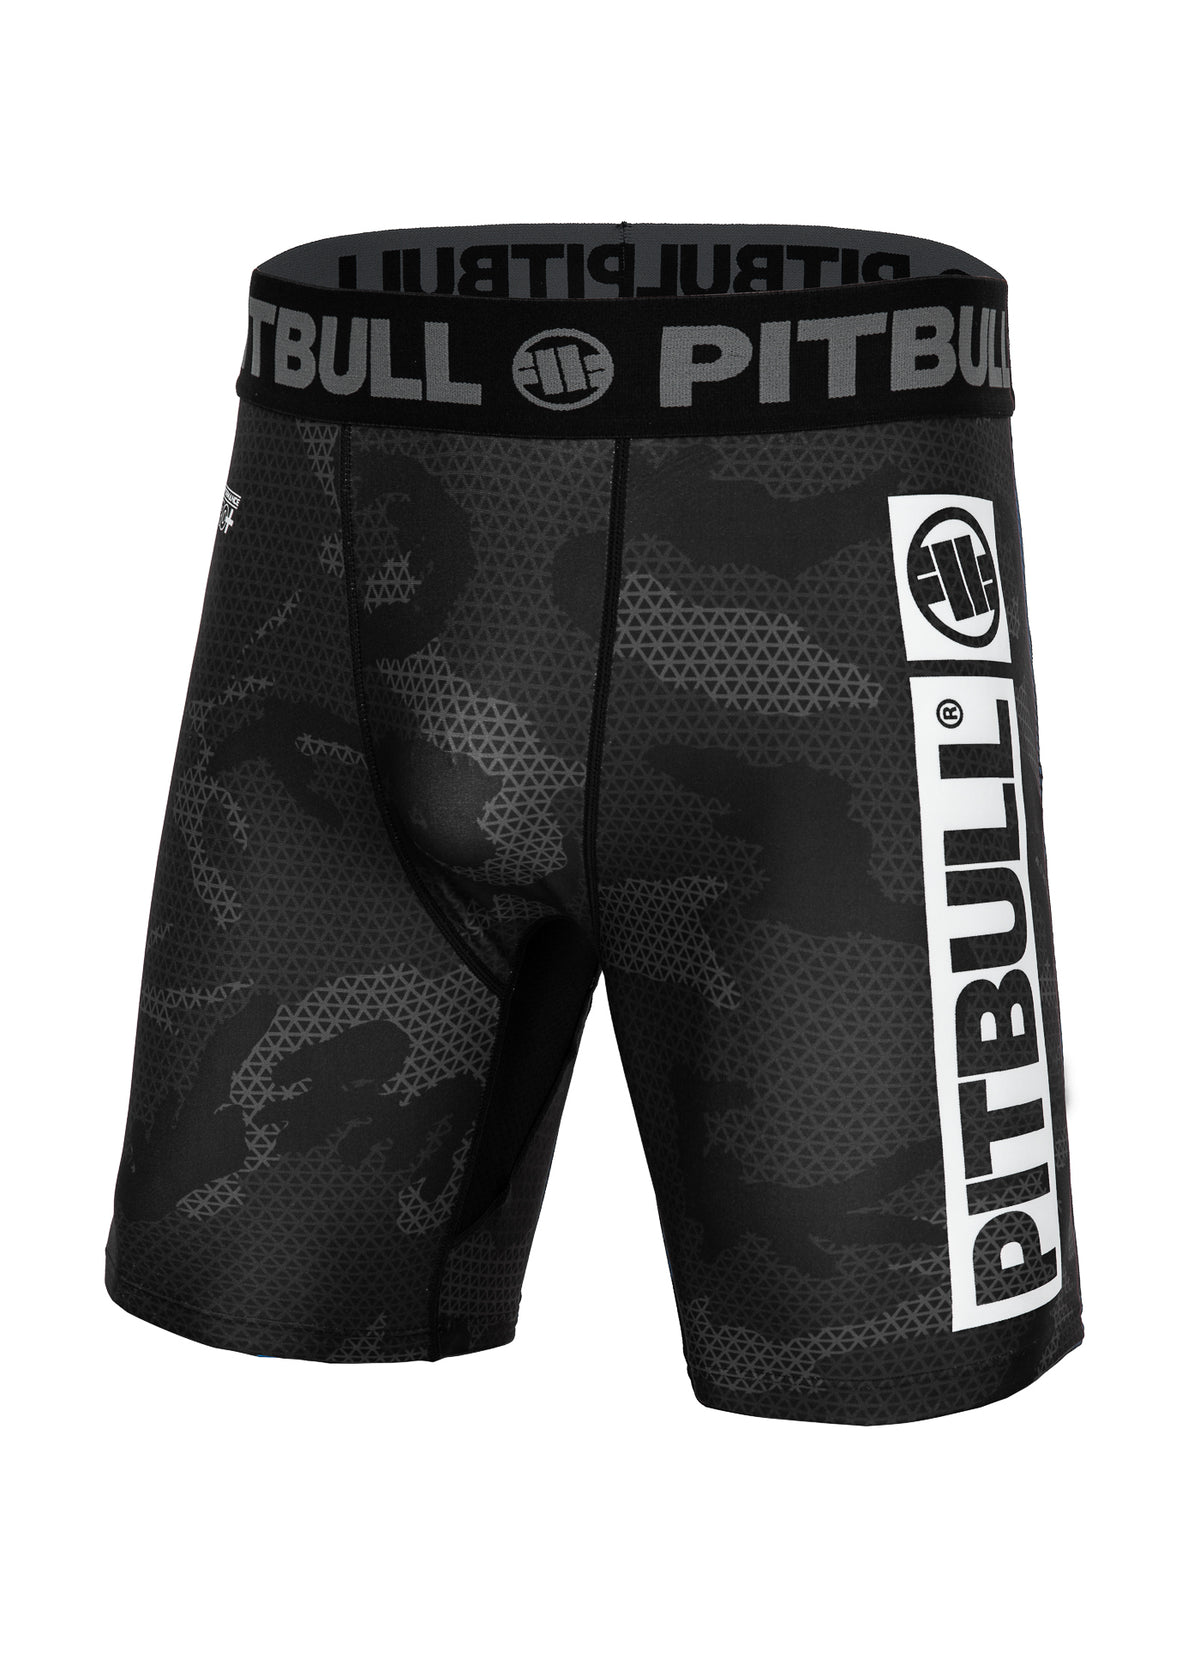 NET CAMO HILLTOP 2 Camo Compression Shorts - Pitbull West Coast International Store 